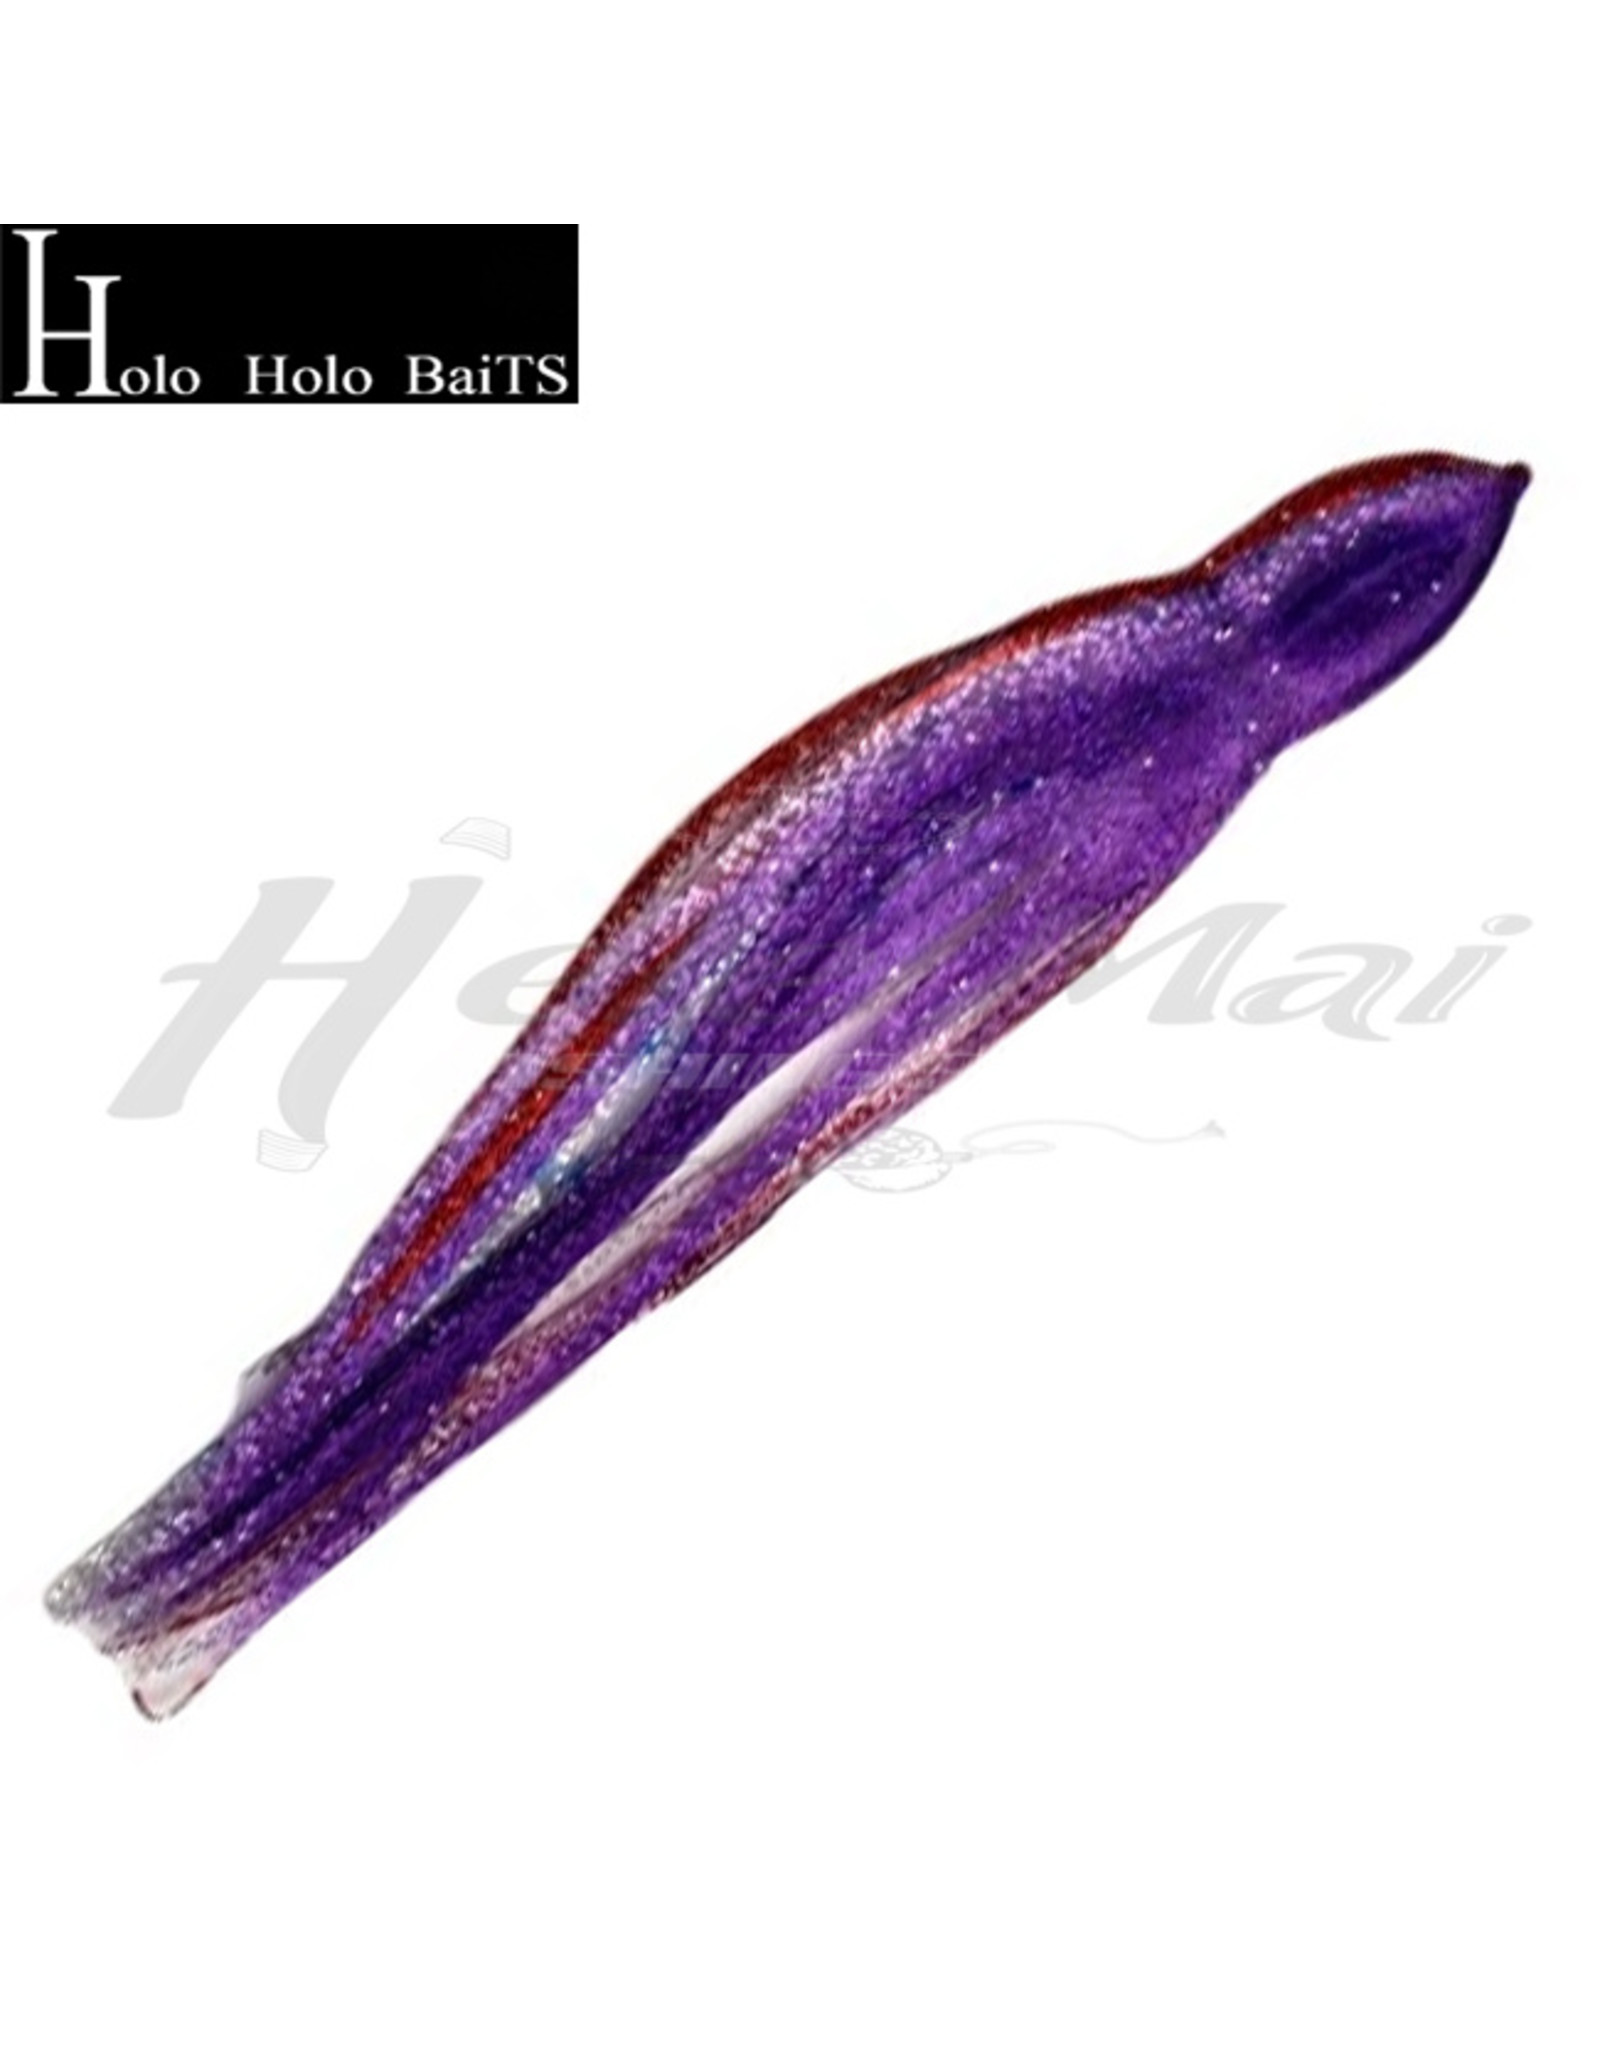 HOLO HOLO HAWAII (HHH) HH, 7" SQUID SKIRT DOTS GLITTER PURPLE 1152